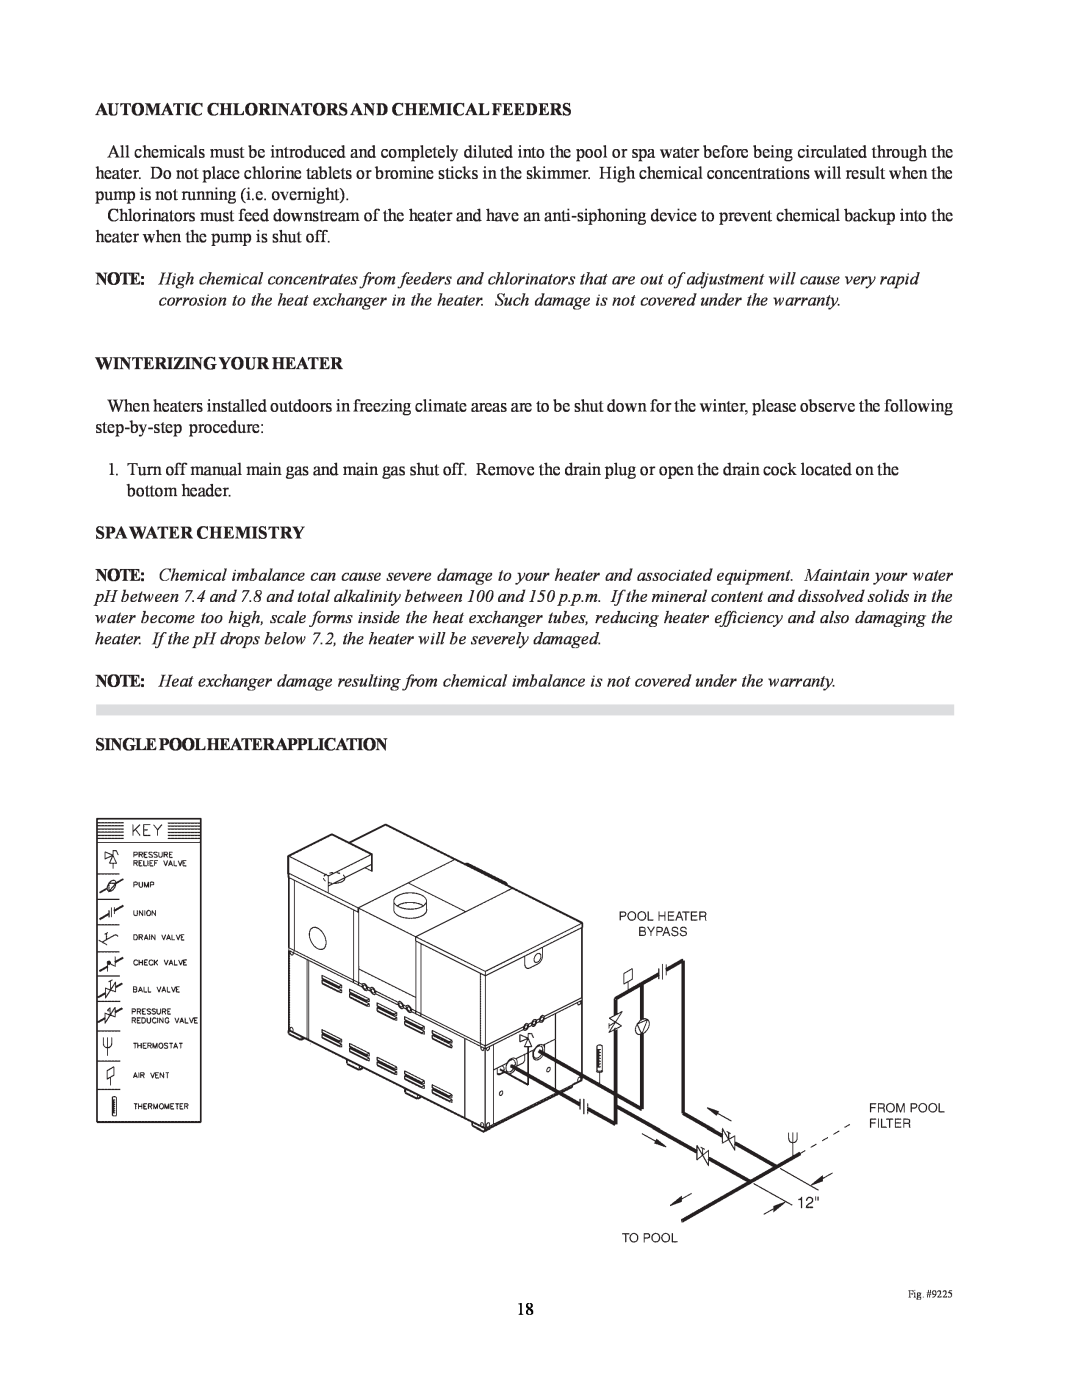 Raypak 302-902 manual Automatic Chlorinators And Chemicalfeeders, Winterizingyour Heater, Spawater Chemistry, Fig. #9225 